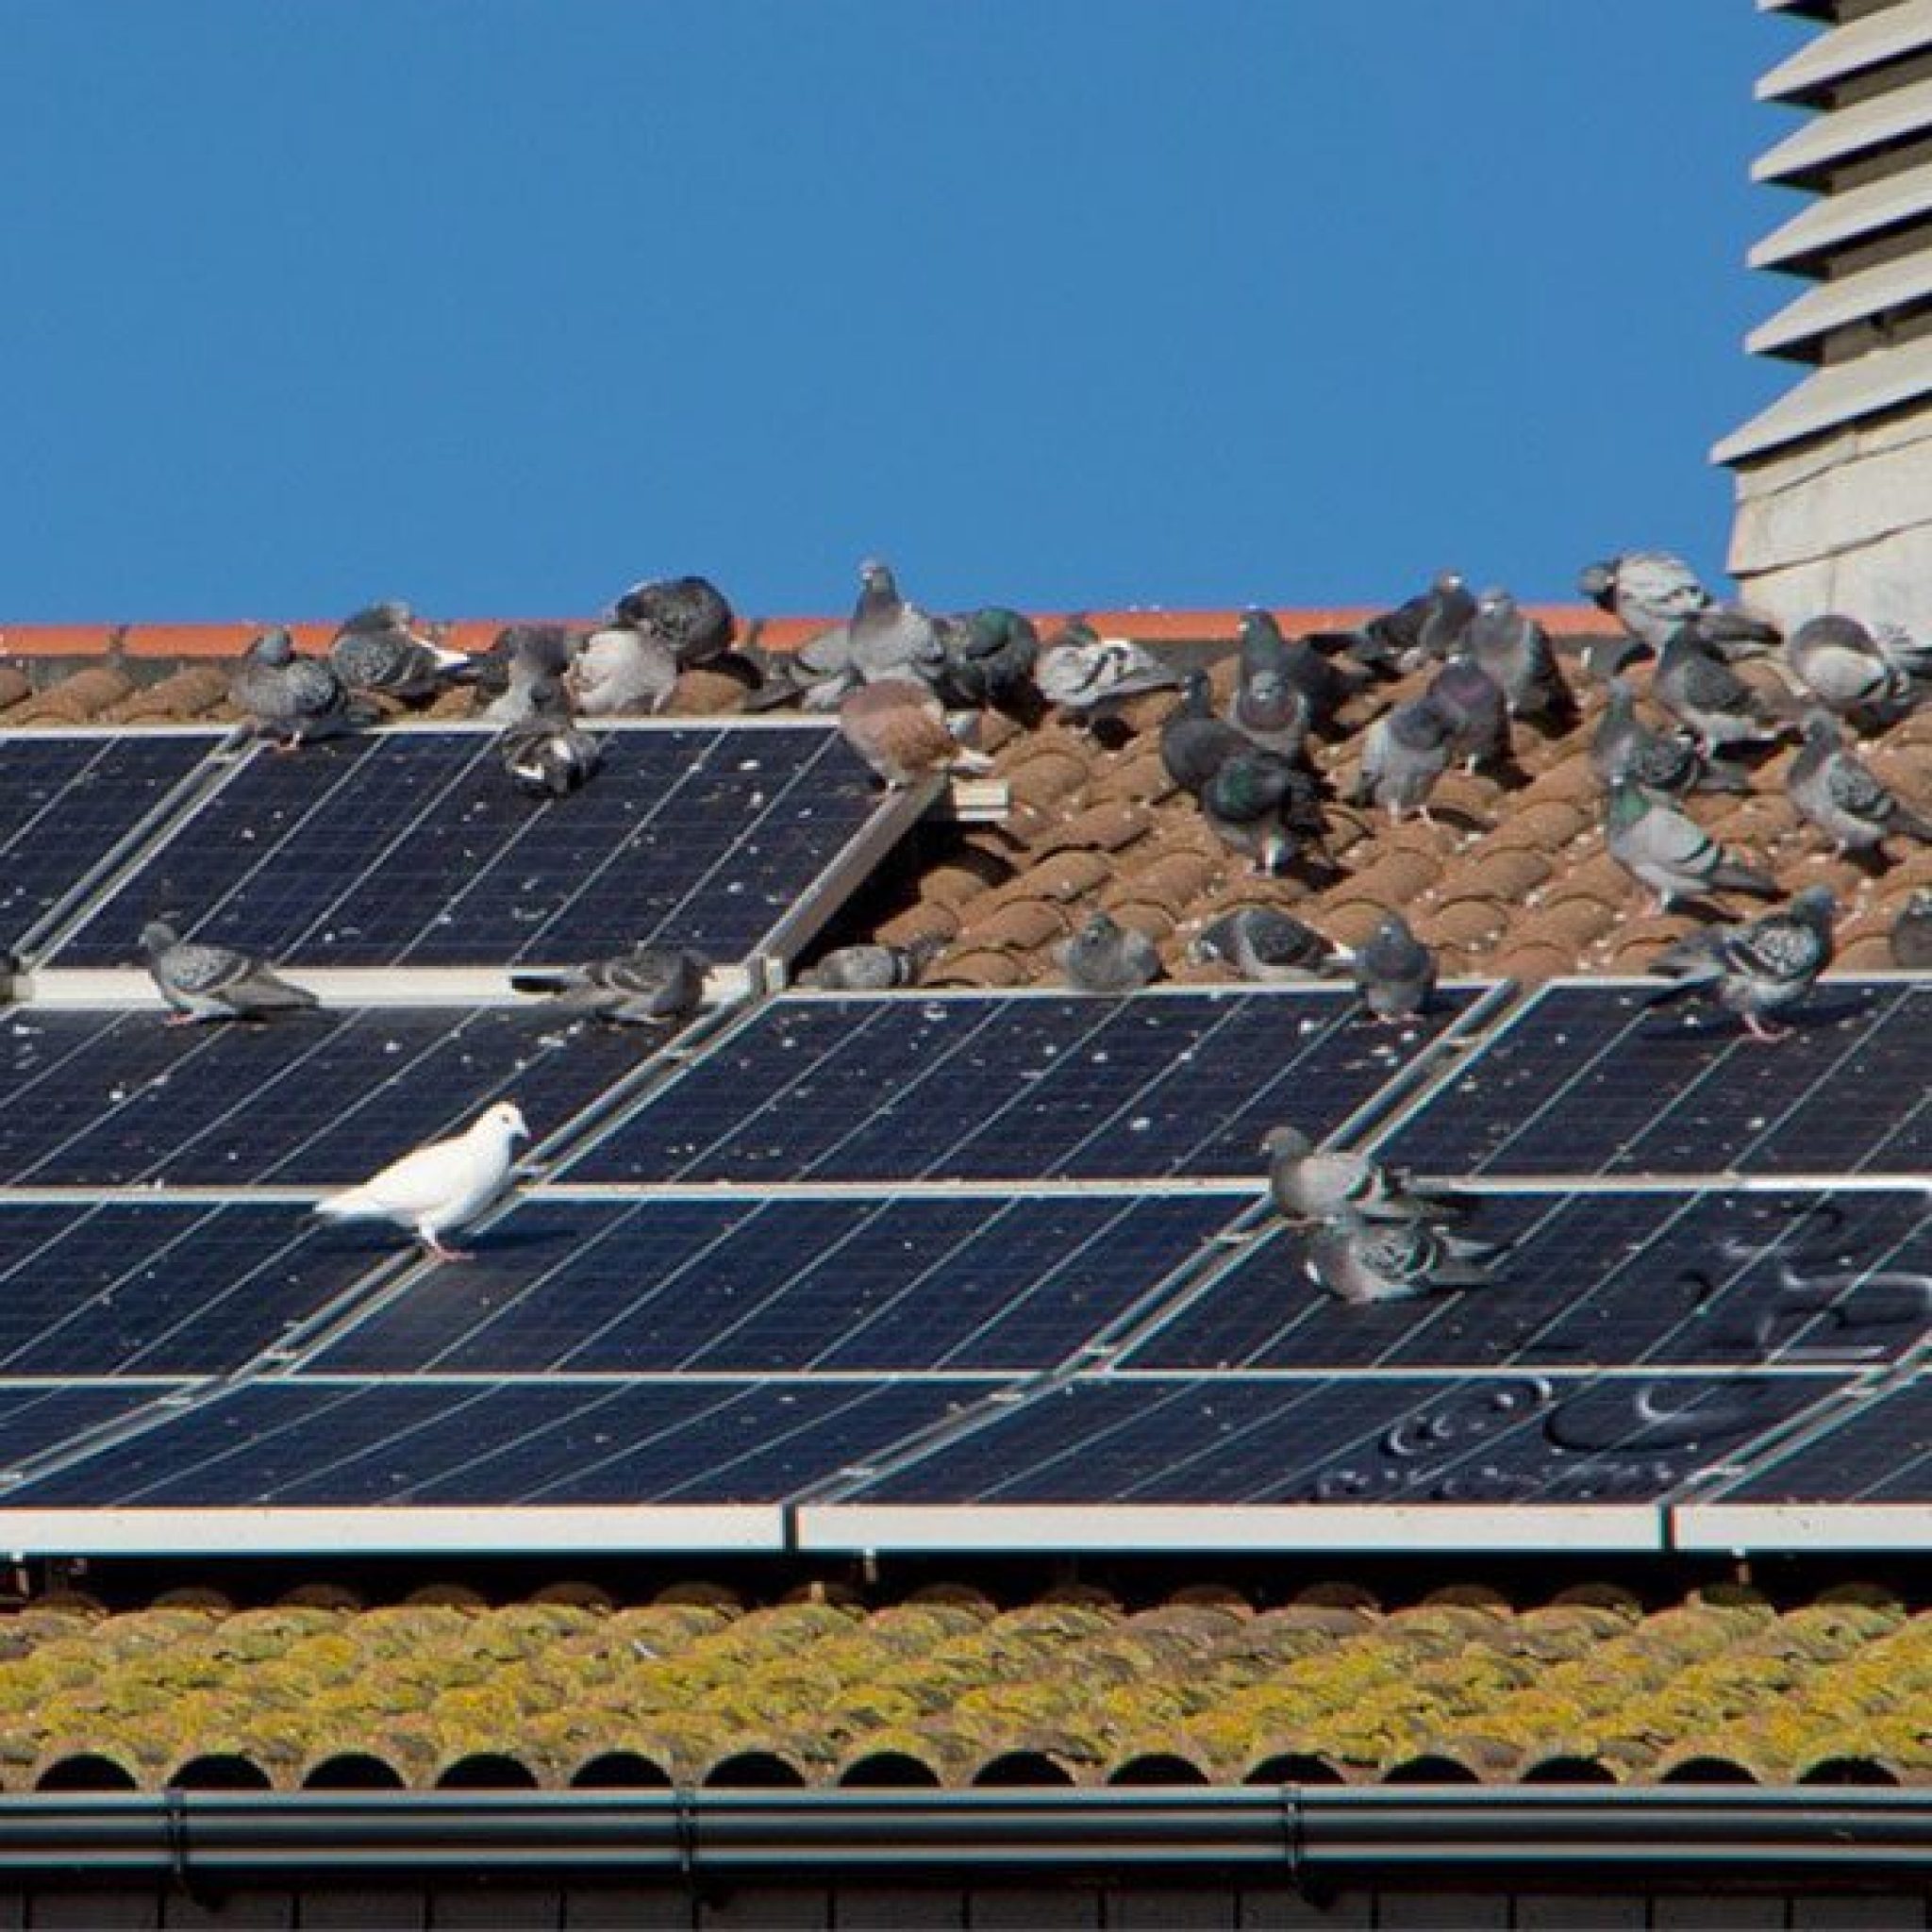 Birds roosting on solar panels